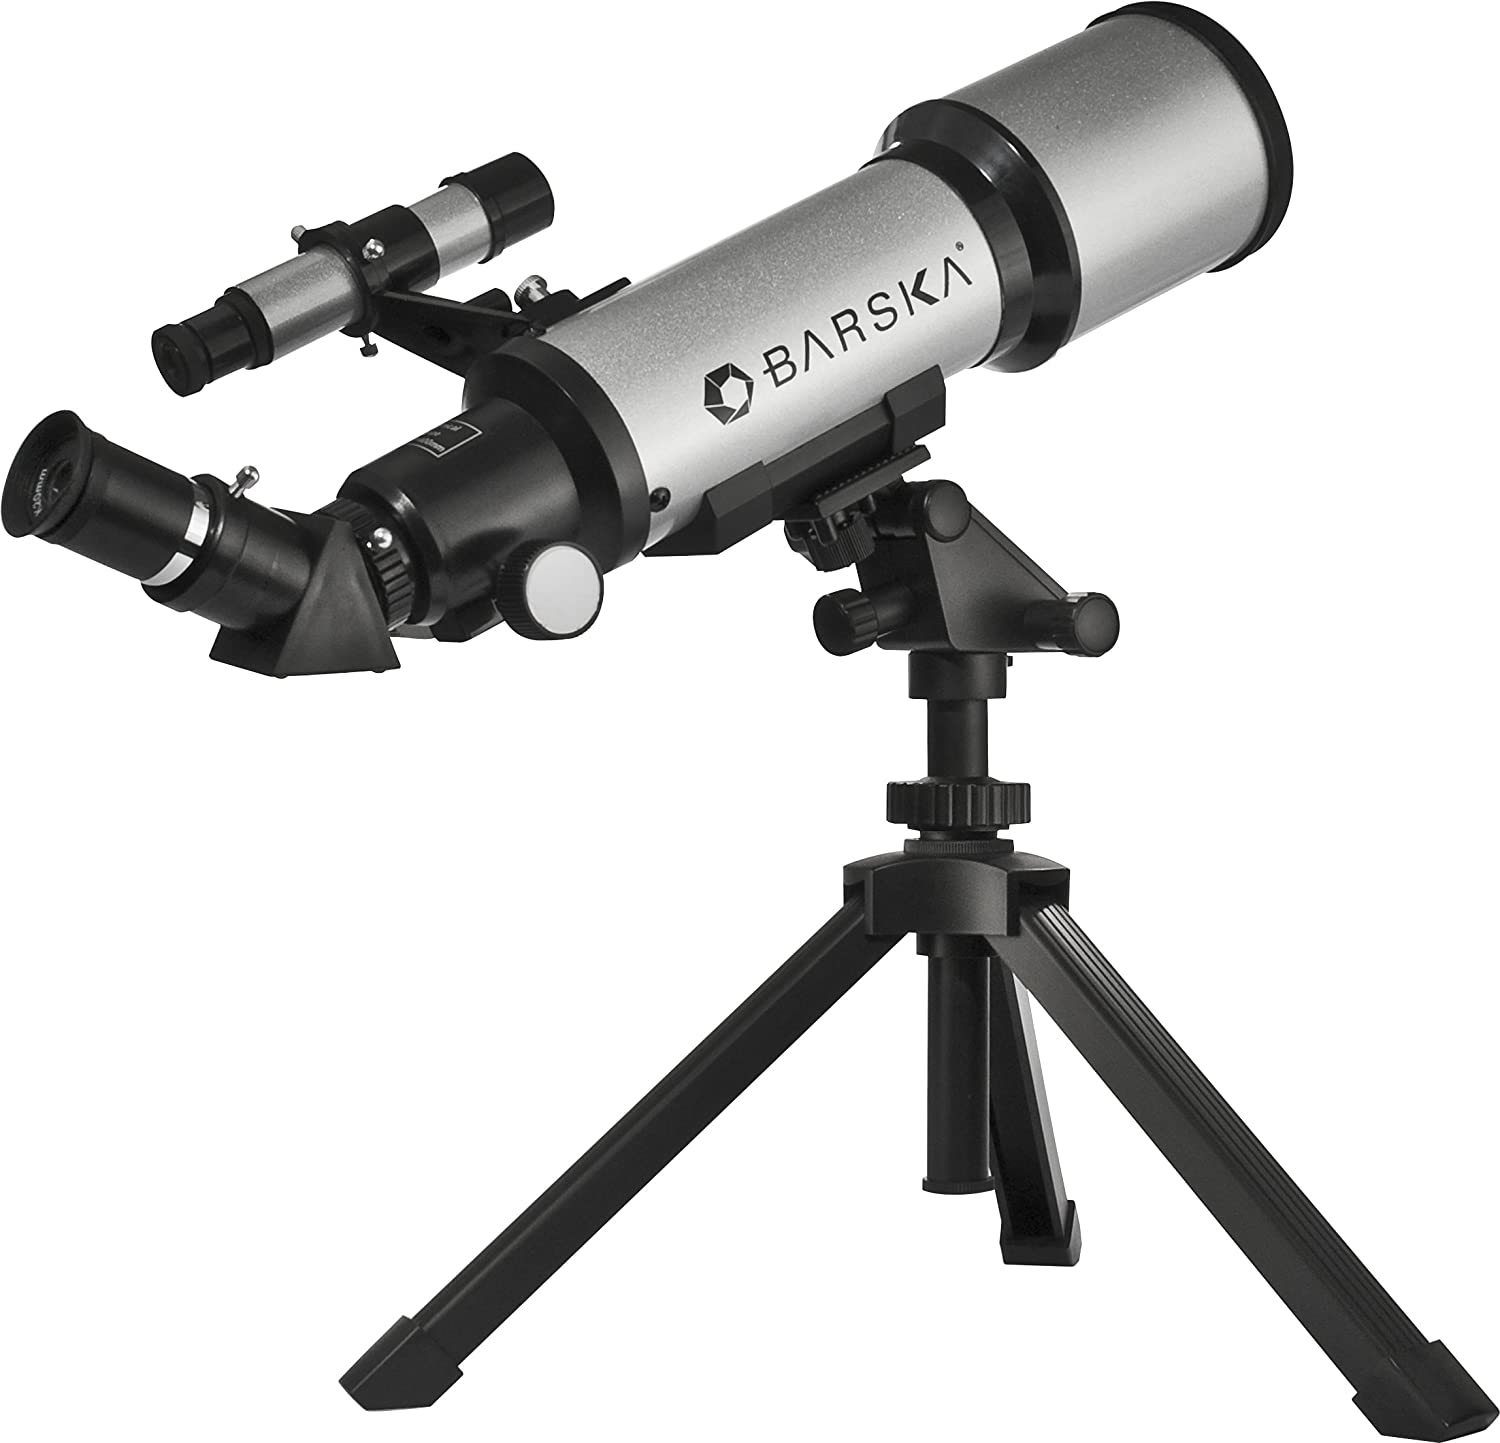 BARSKA Starwatcher 400x70mm Refractor Telescope w/ Tabletop Tripod & Carry Case - $77.99